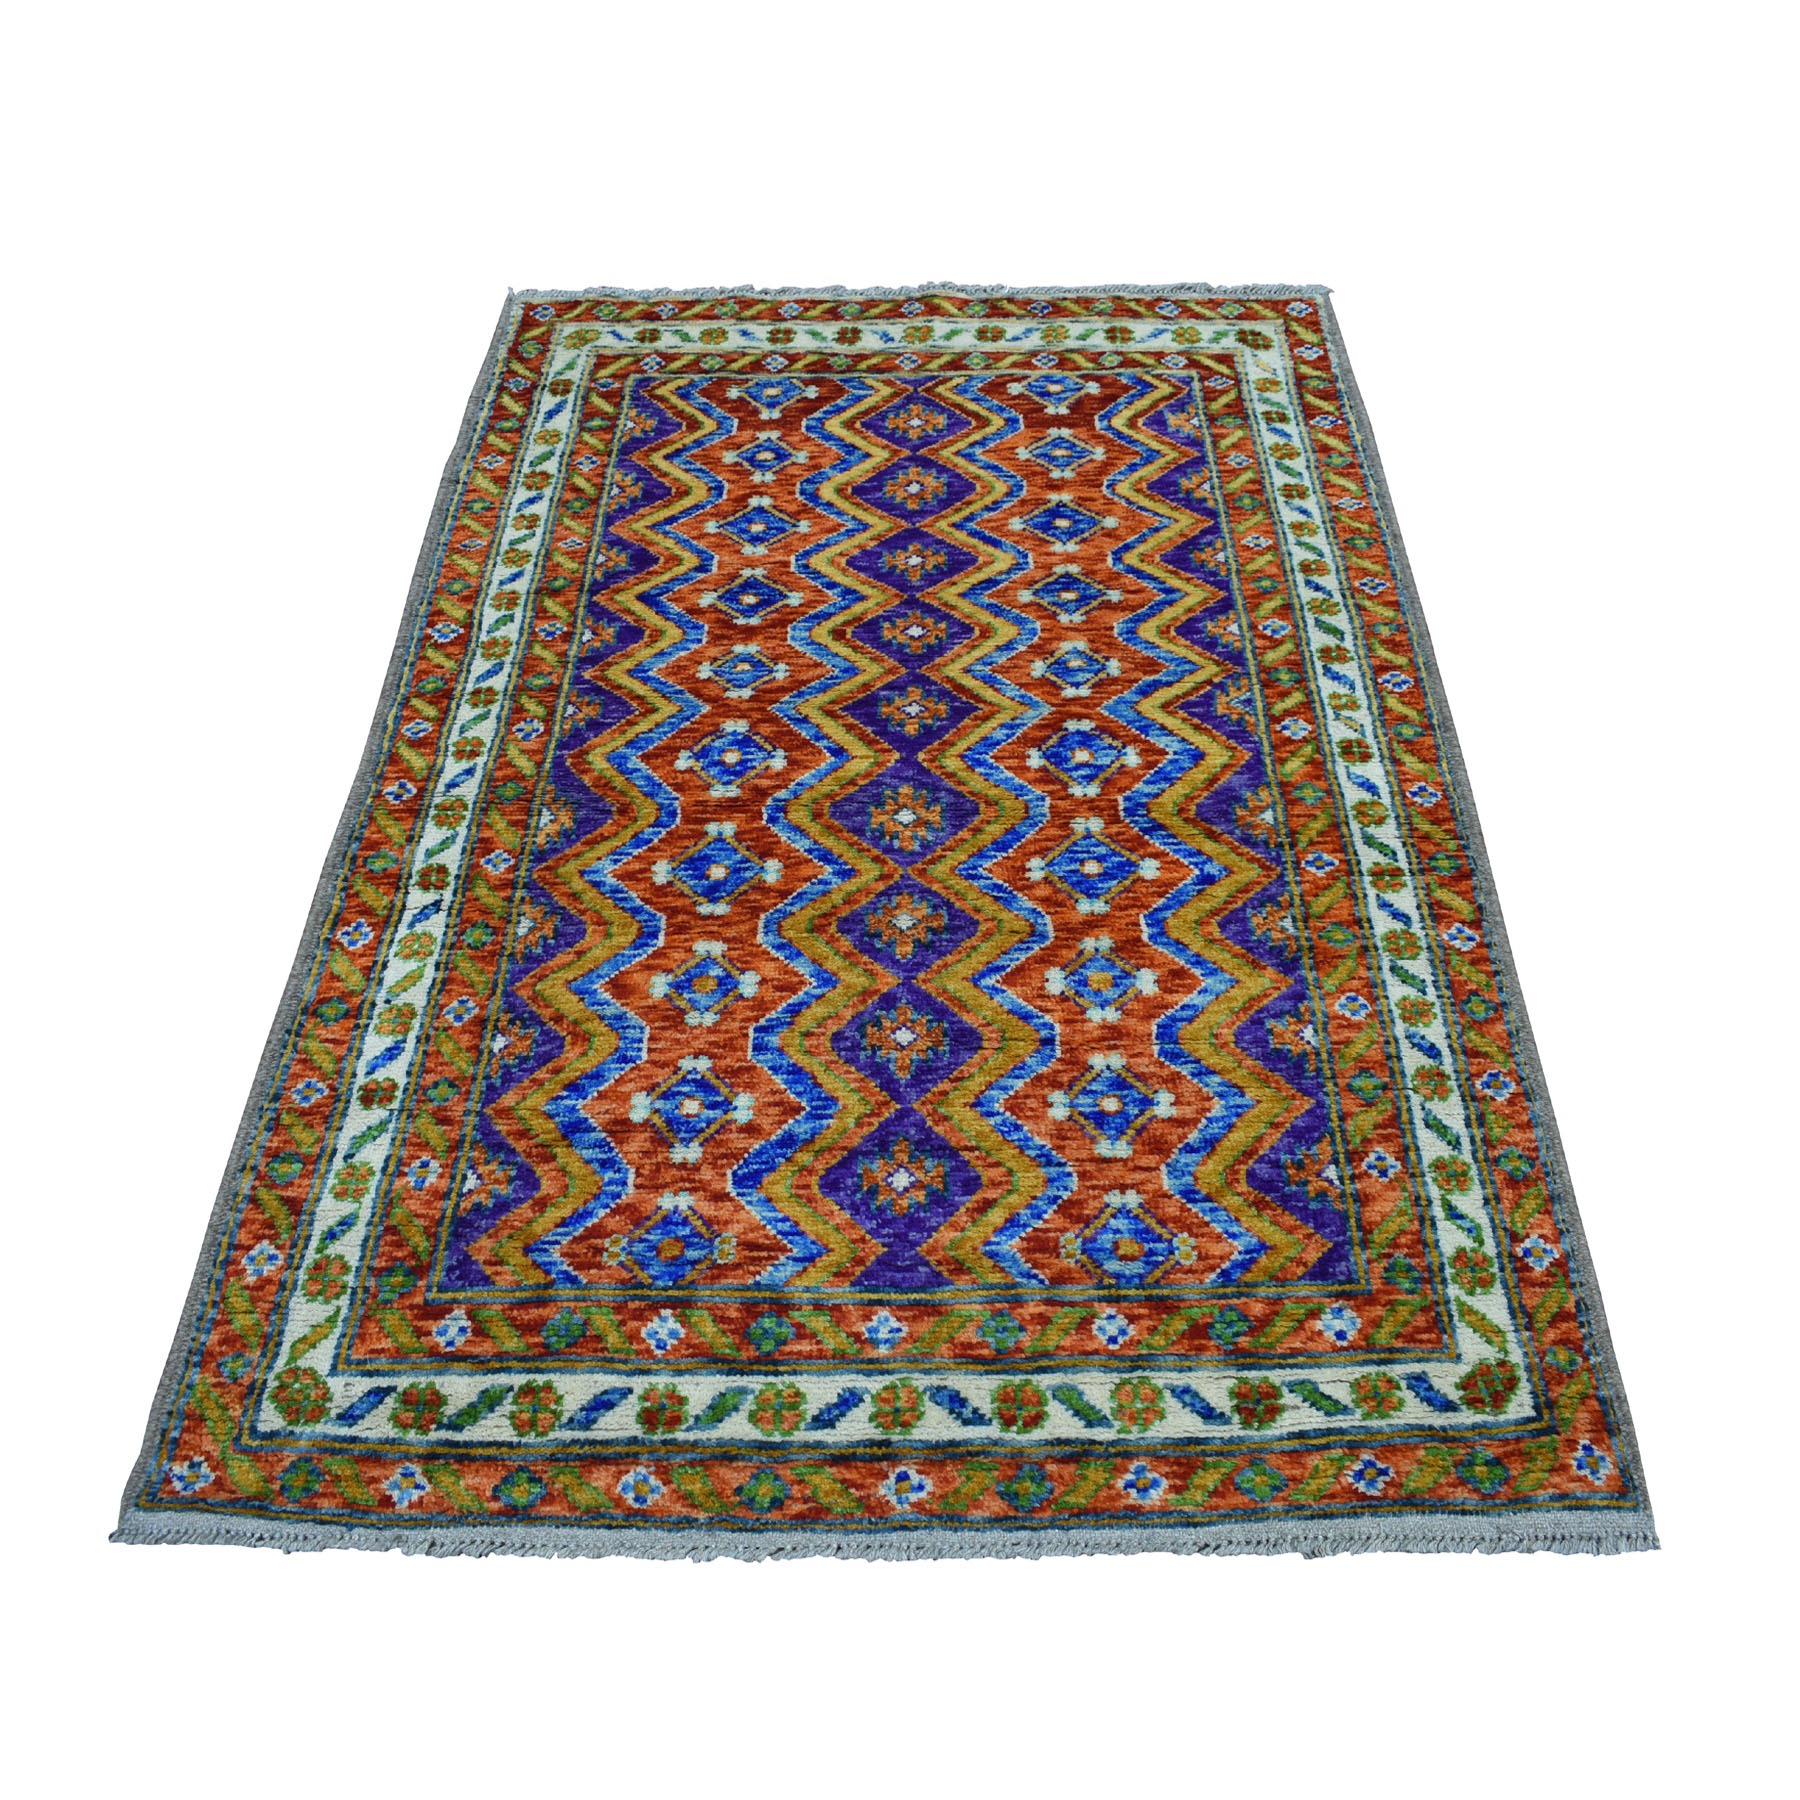 4'x5'10" Orange Colorful Afghan Baluch Tribal Design Hand Woven Pure Wool Oriental Rug 